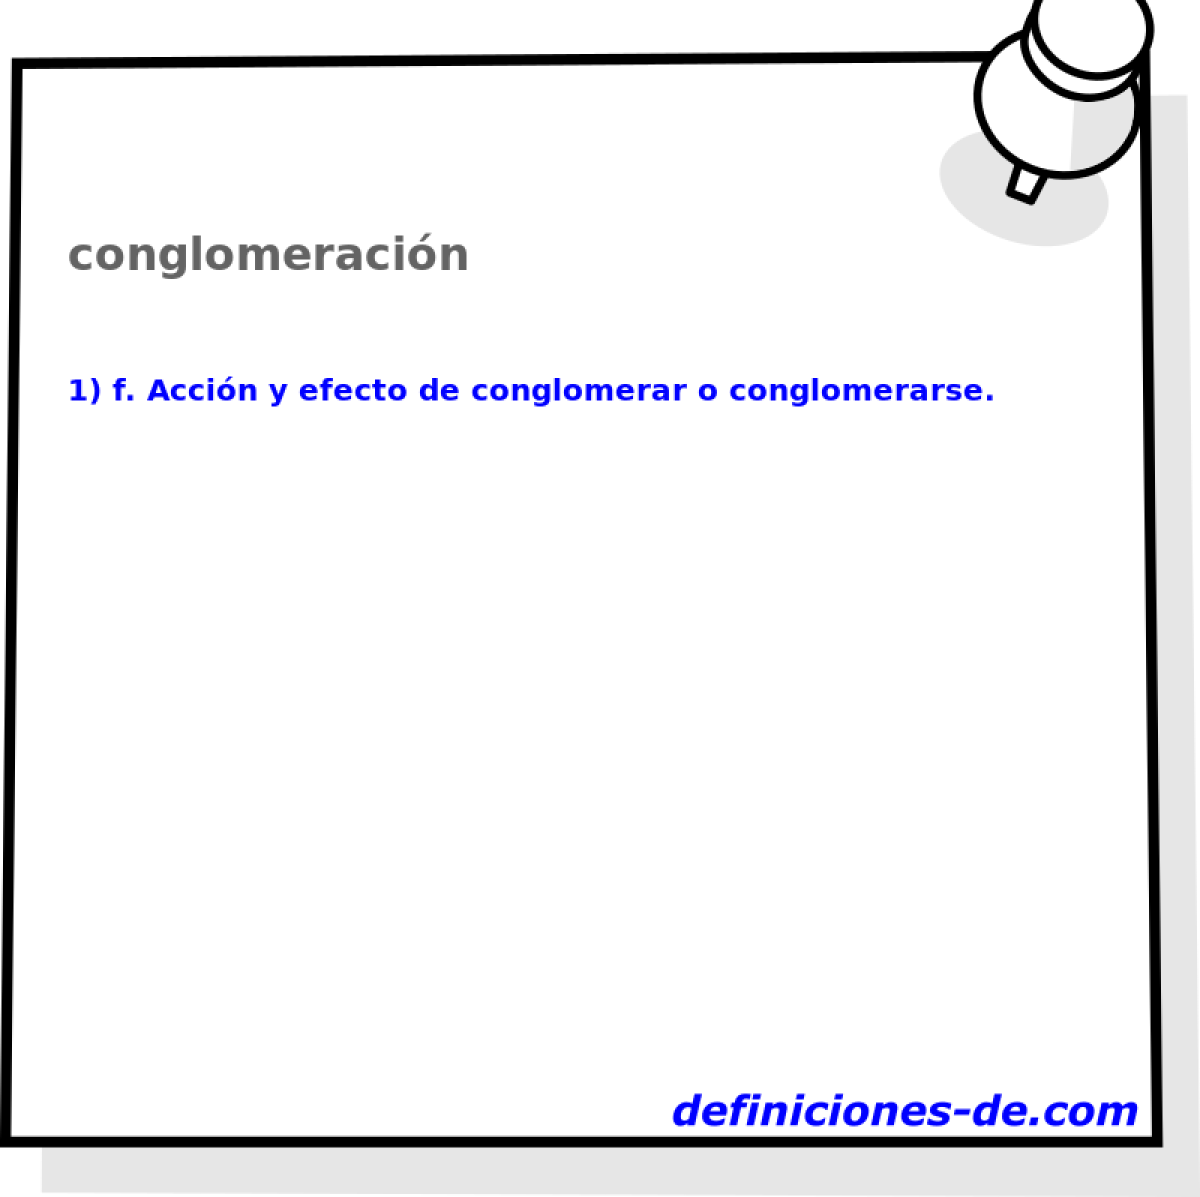 conglomeracin 